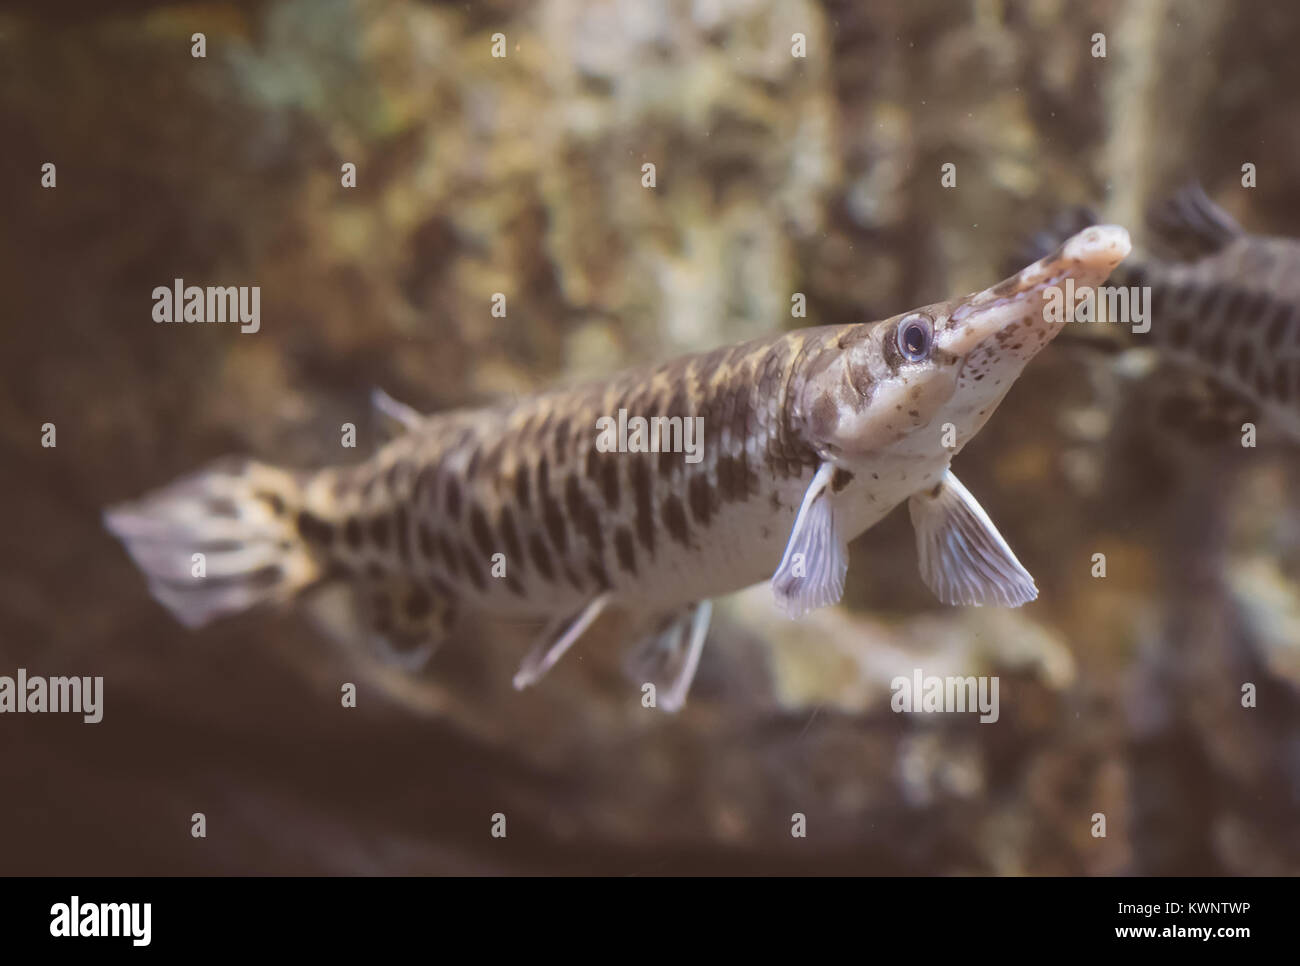 Duckbill catfish in the zoo. Lepisosteus platyrhincus. Stock Photo